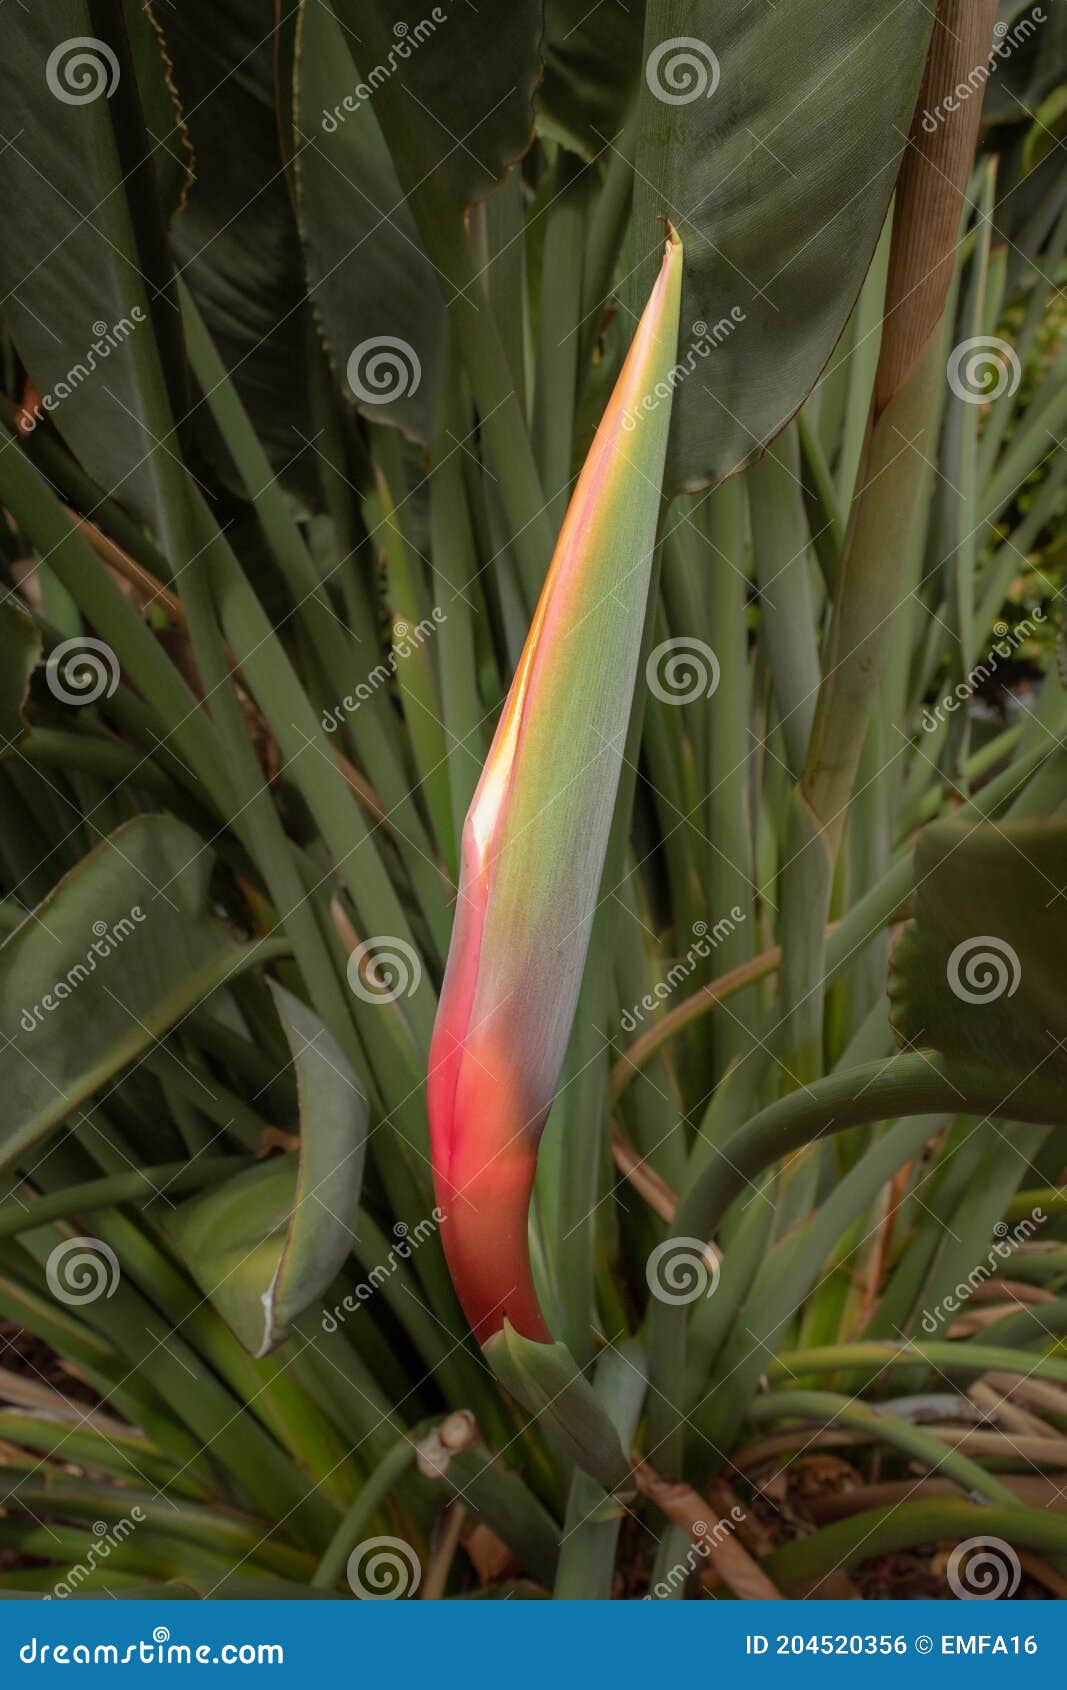 Bird of Paradise Flower Bud in Green Leaves Stock Photo - Image of stem ...